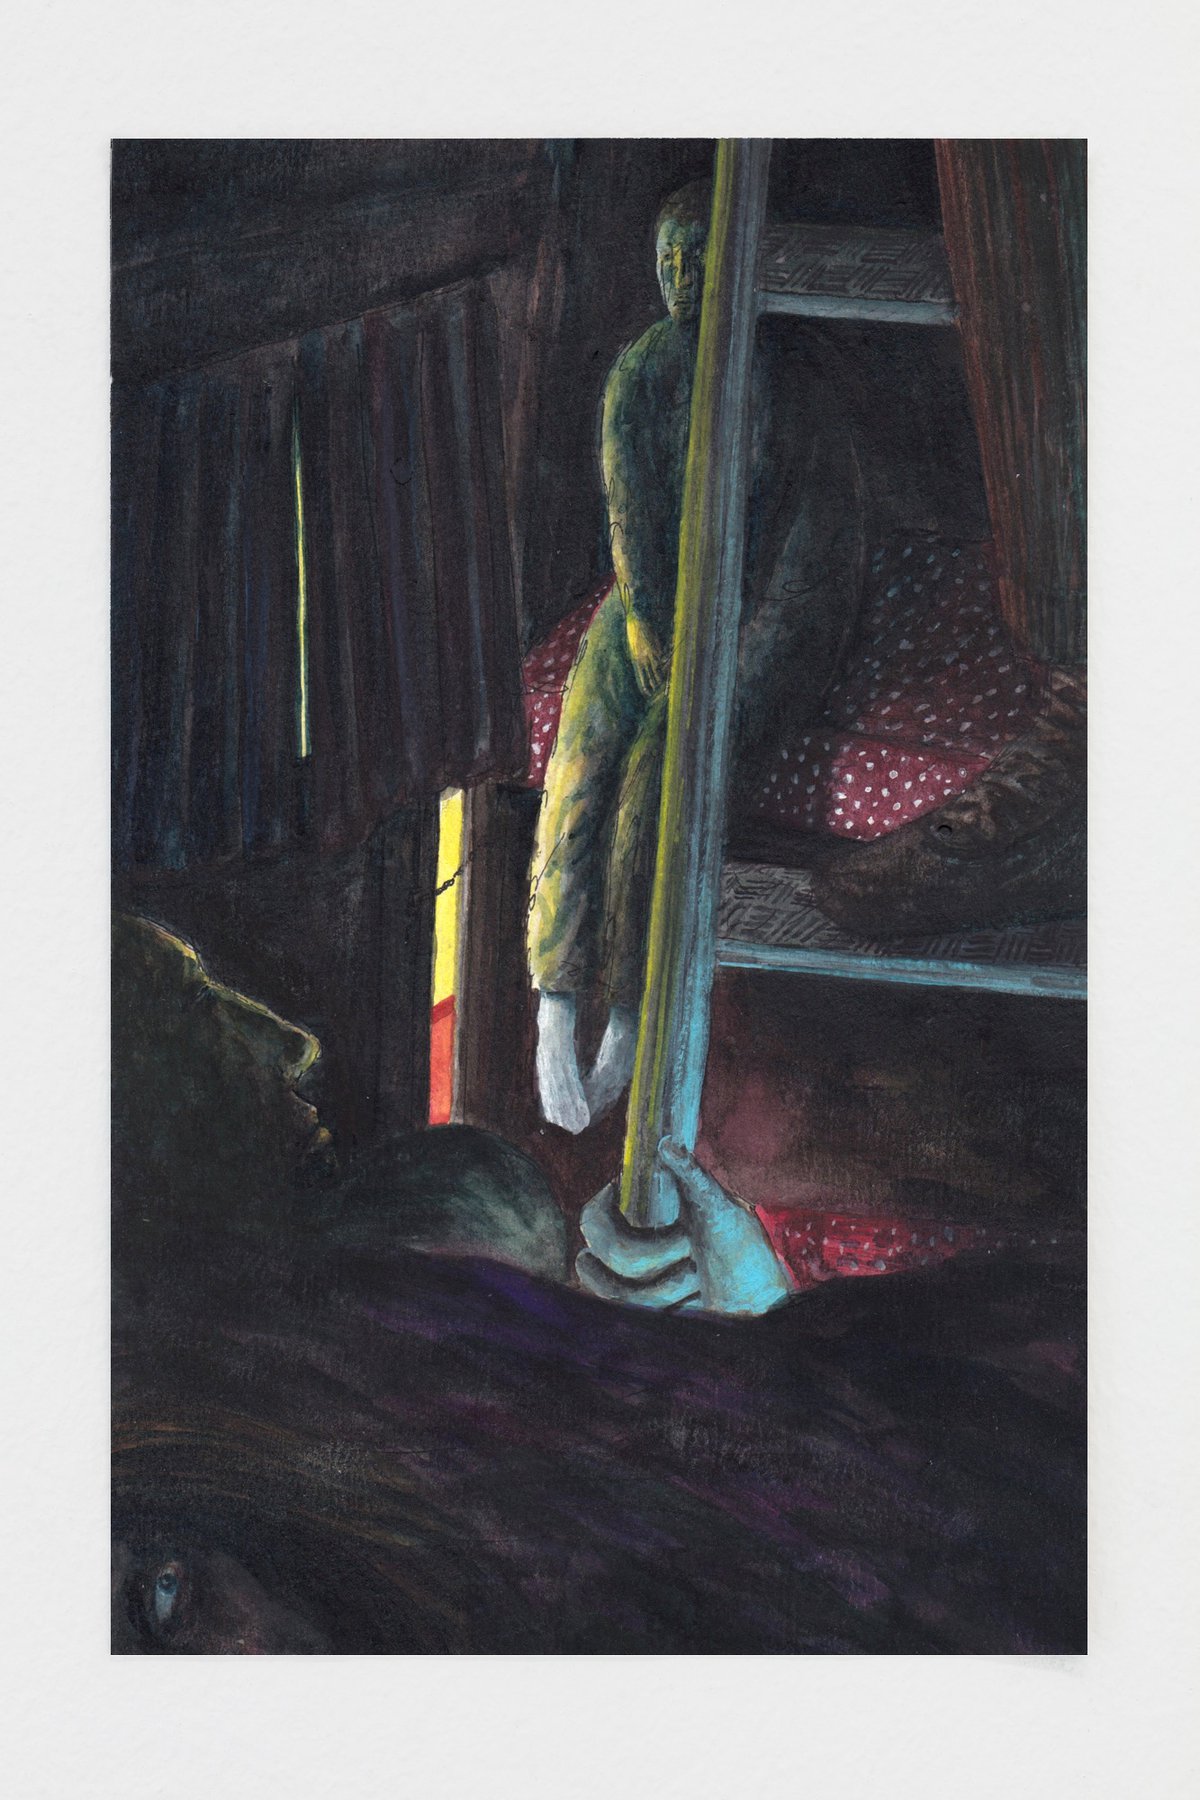 Matthias NogglerLocked Door, 2020Gouache, Aquarell, Tinte und Bleistift auf Papier20,5 x 13,2 cm